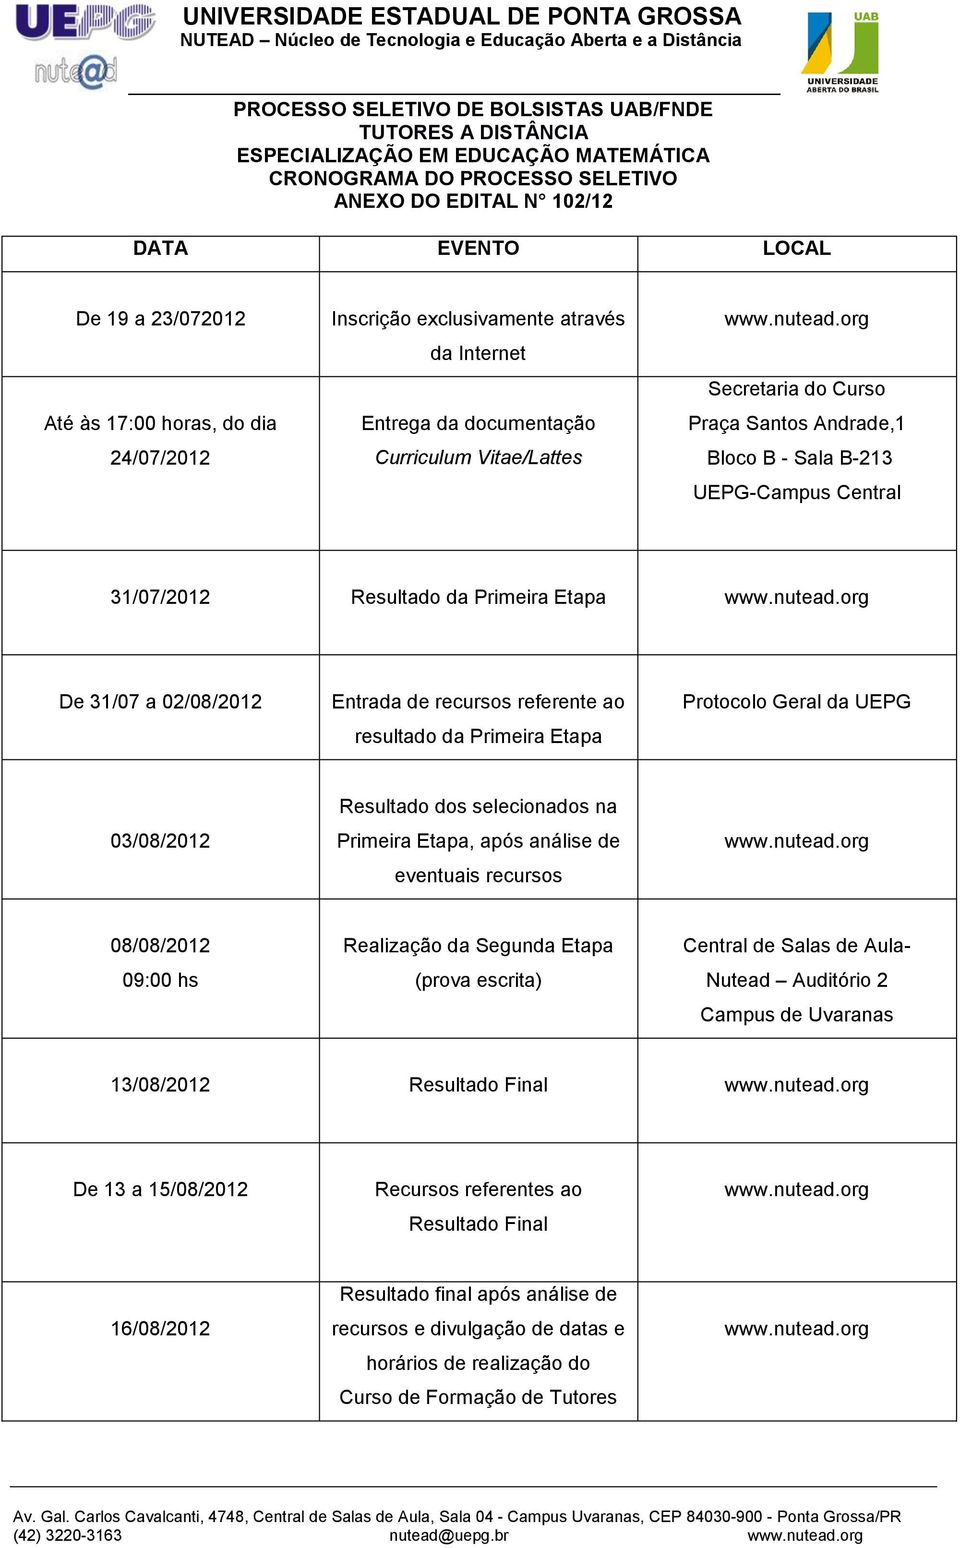 Central 31/07/2012 Resultado da Primeira Etapa De 31/07 a 02/08/2012 Entrada de recursos referente ao resultado da Primeira Etapa Protocolo Geral da UEPG 03/08/2012 Resultado dos selecionados na